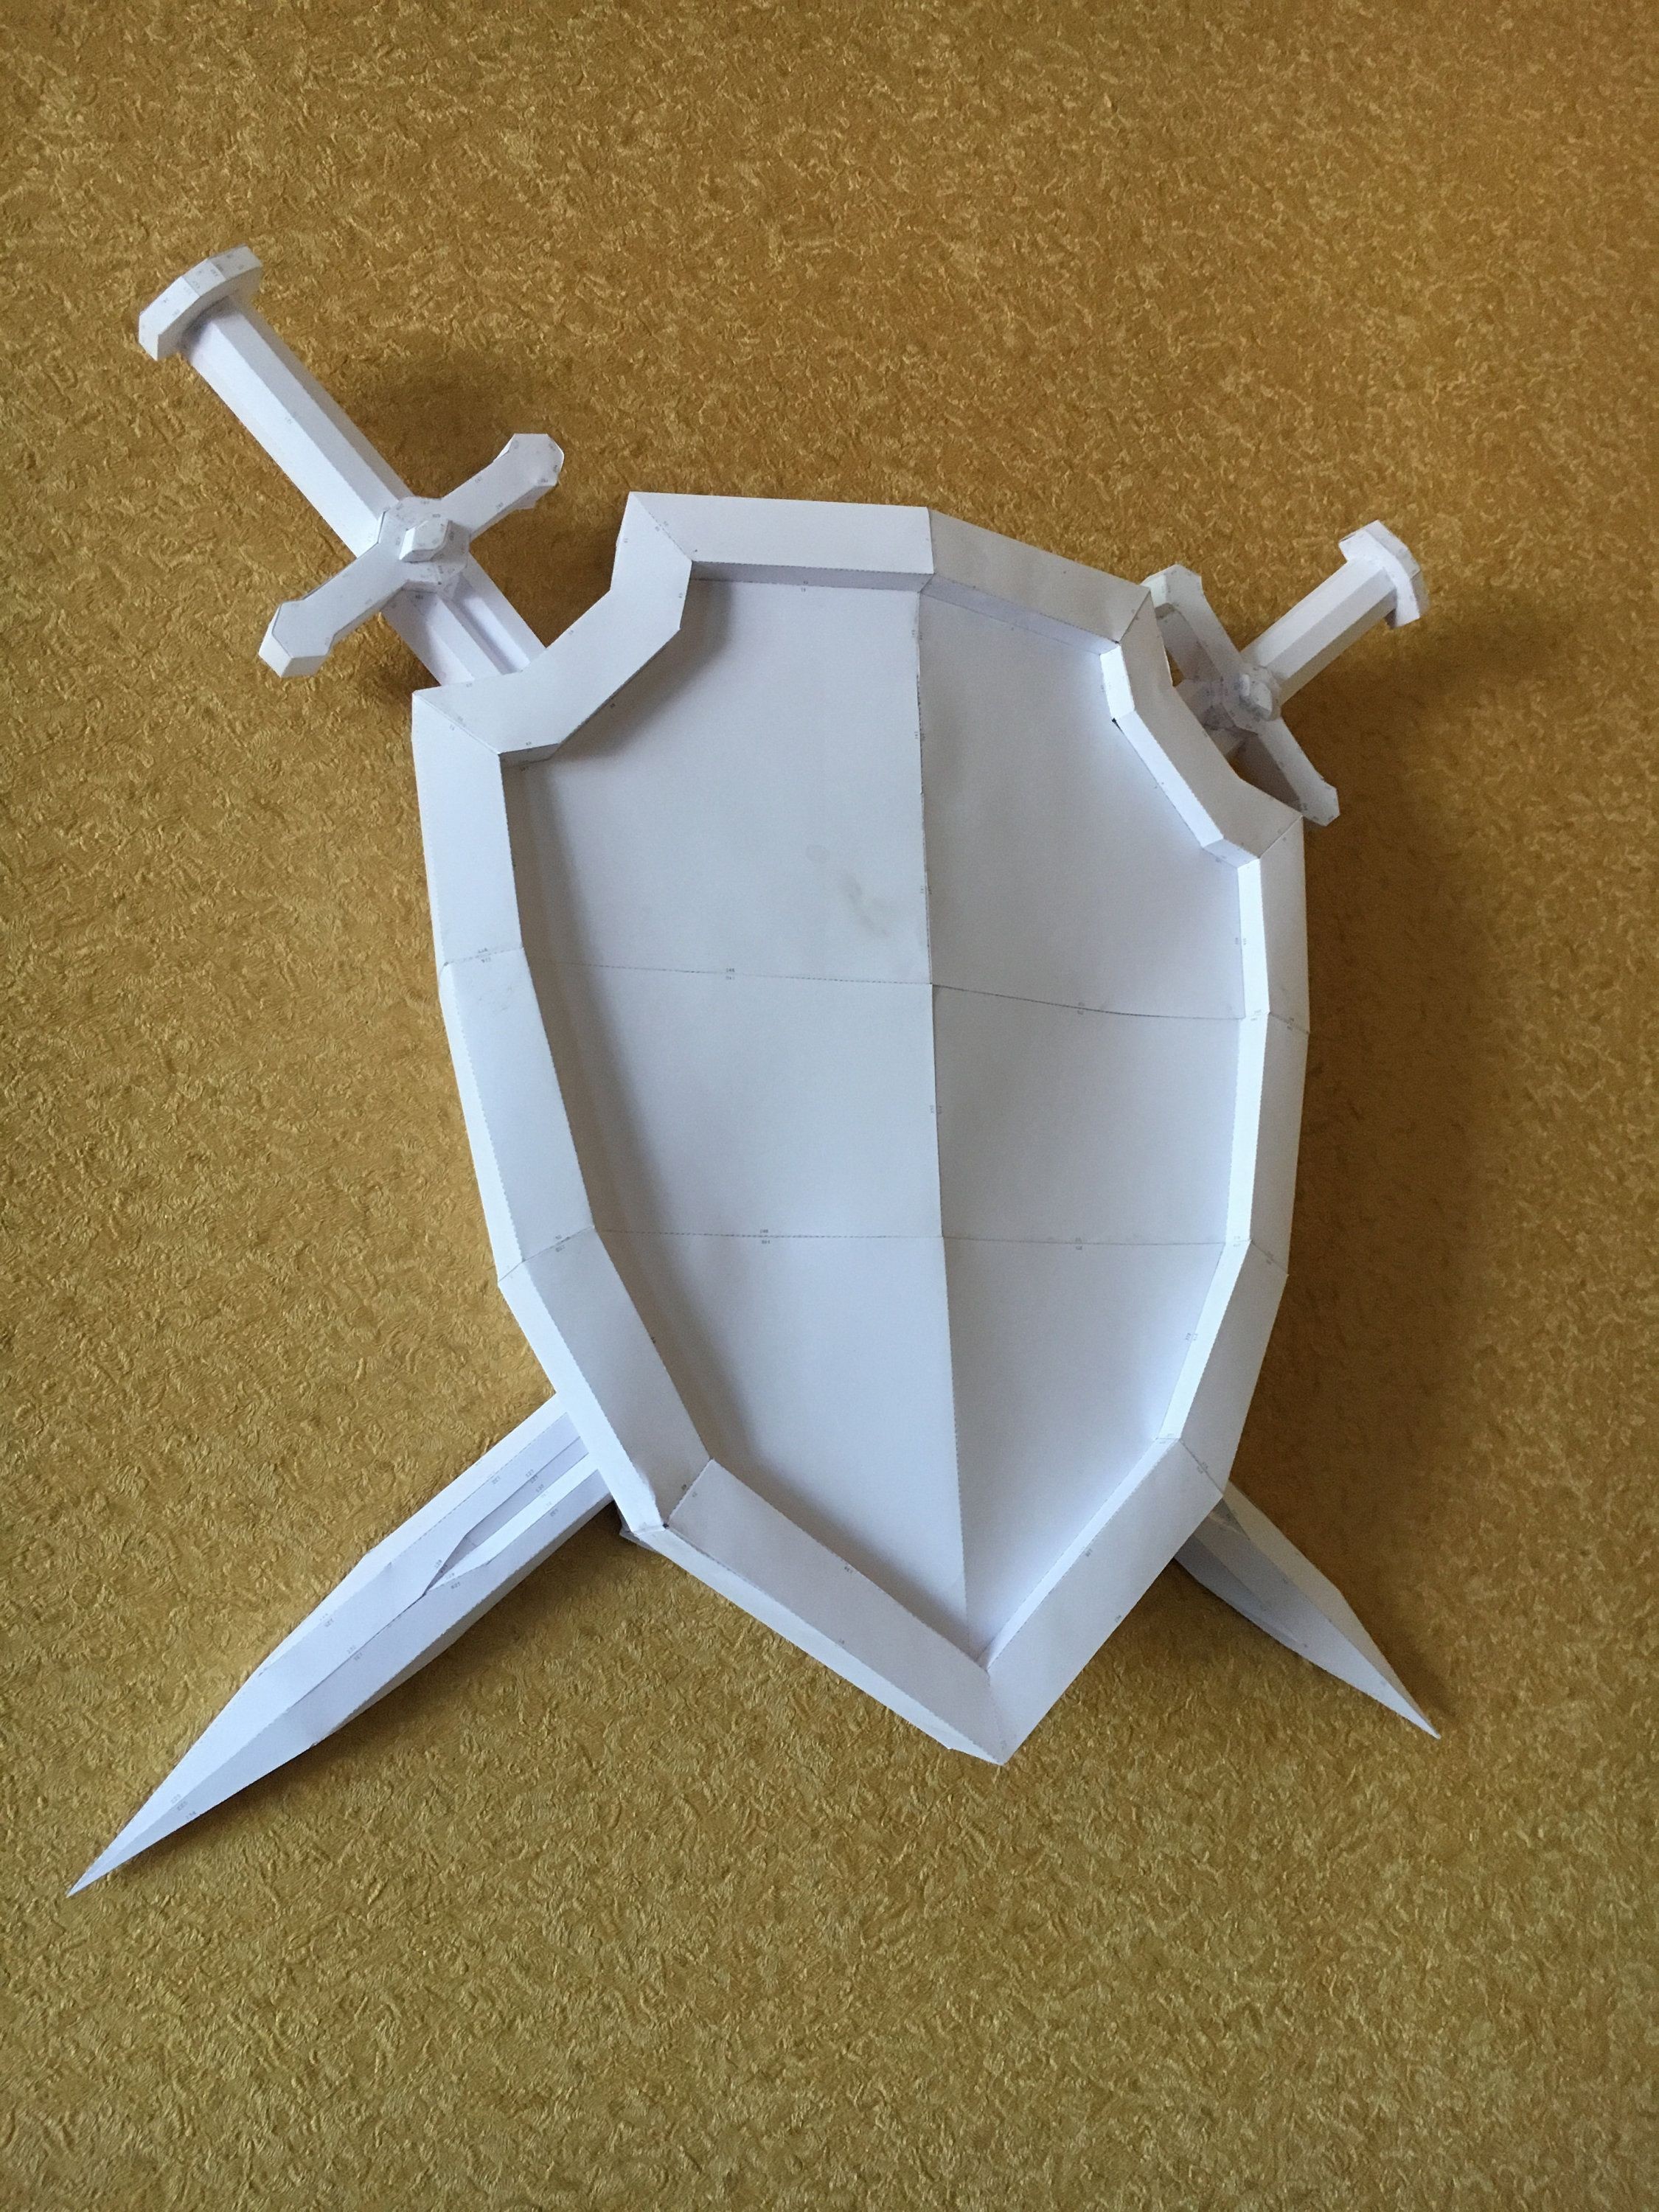 Papercraft Store Sword Shield Diy Papercraft Model ÐÑÐ¼Ð°Ð¶Ð½ÑÐµ Ð¸Ð·Ð´ÐµÐ Ð¸Ñ